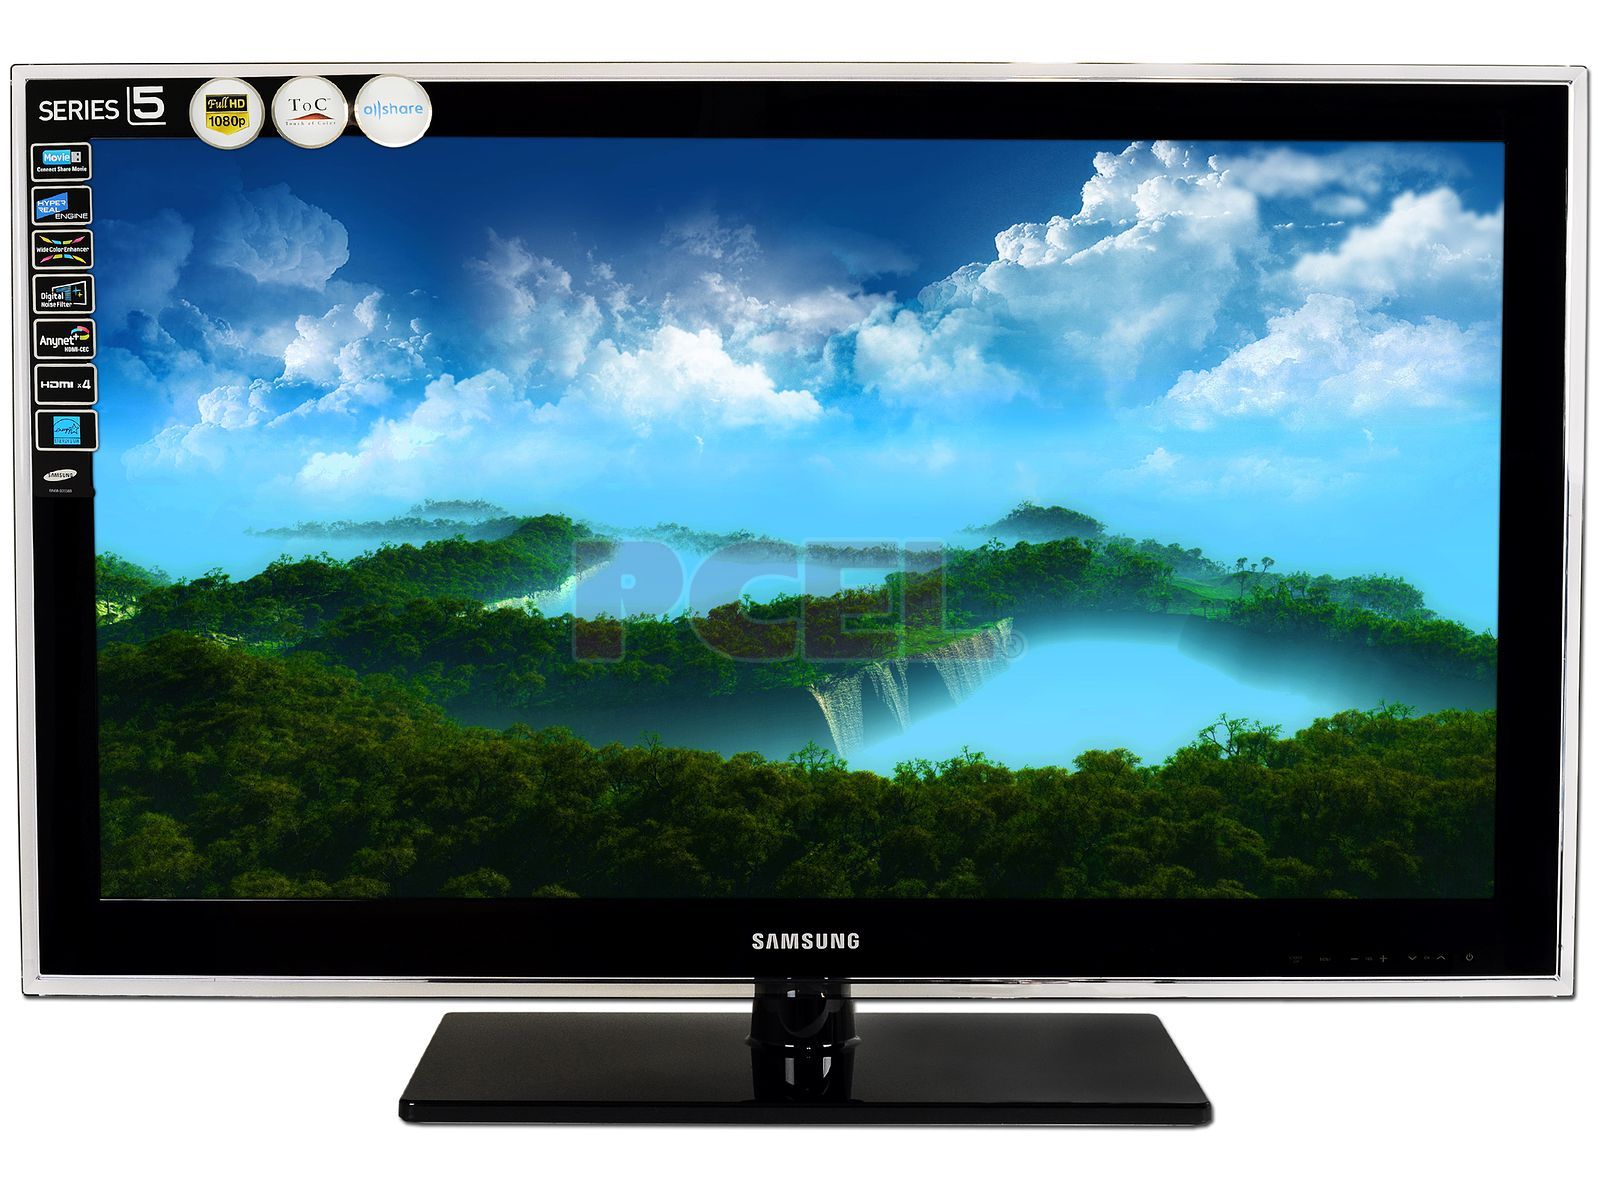 Televisión Samsung Serie 5 de FULL HD 1080p.